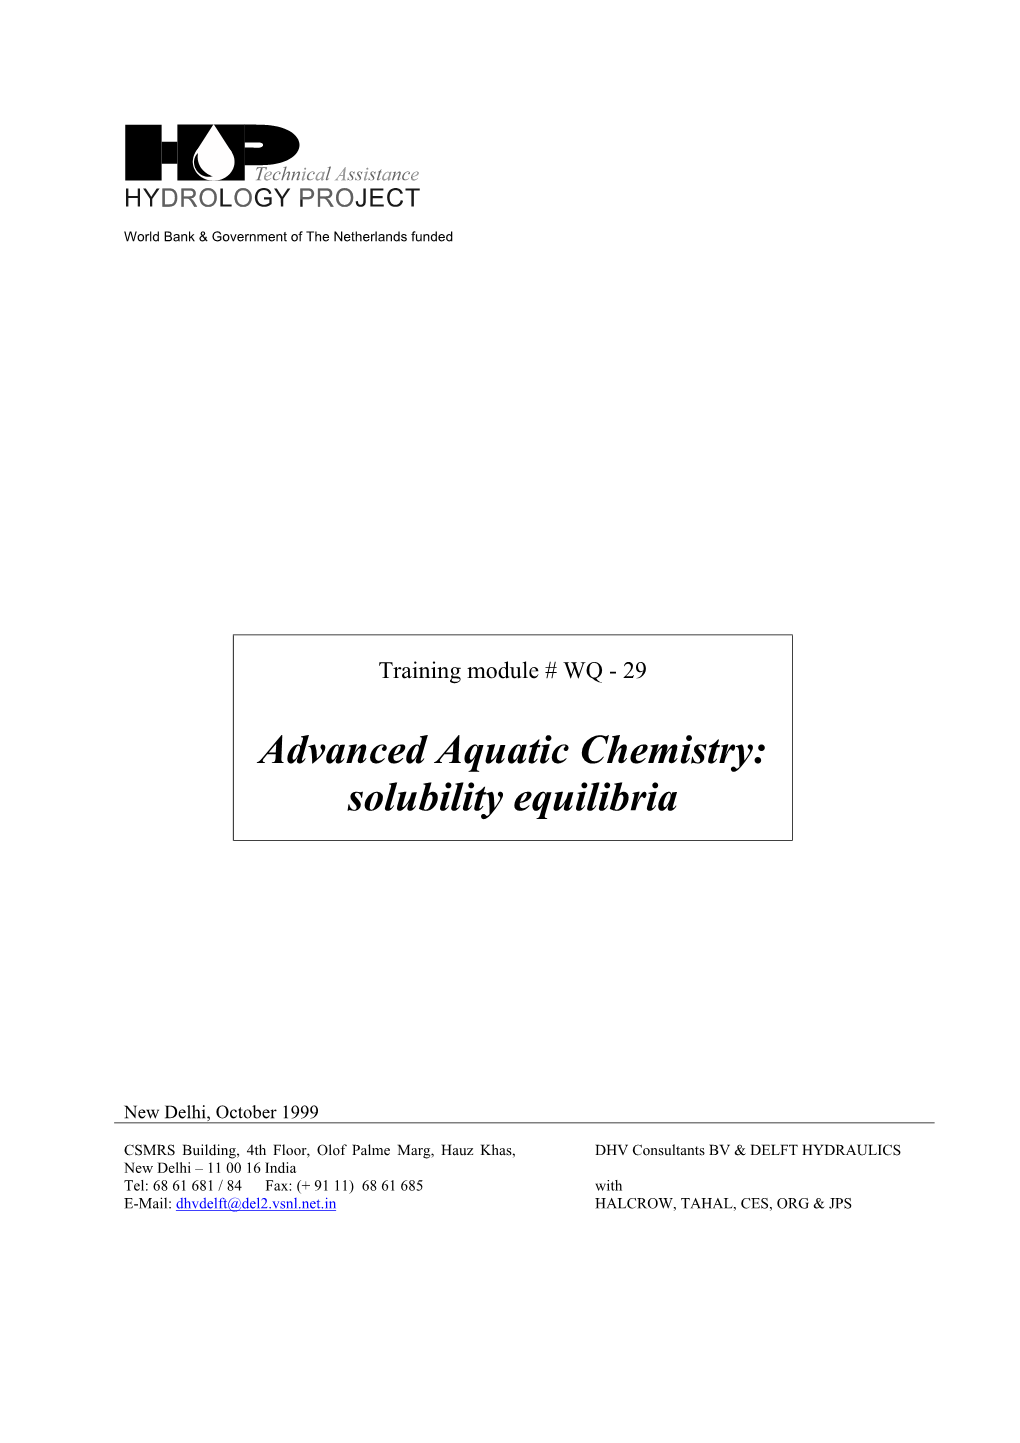 Advanced Aquatic Chemistry: Solubility Equilibria